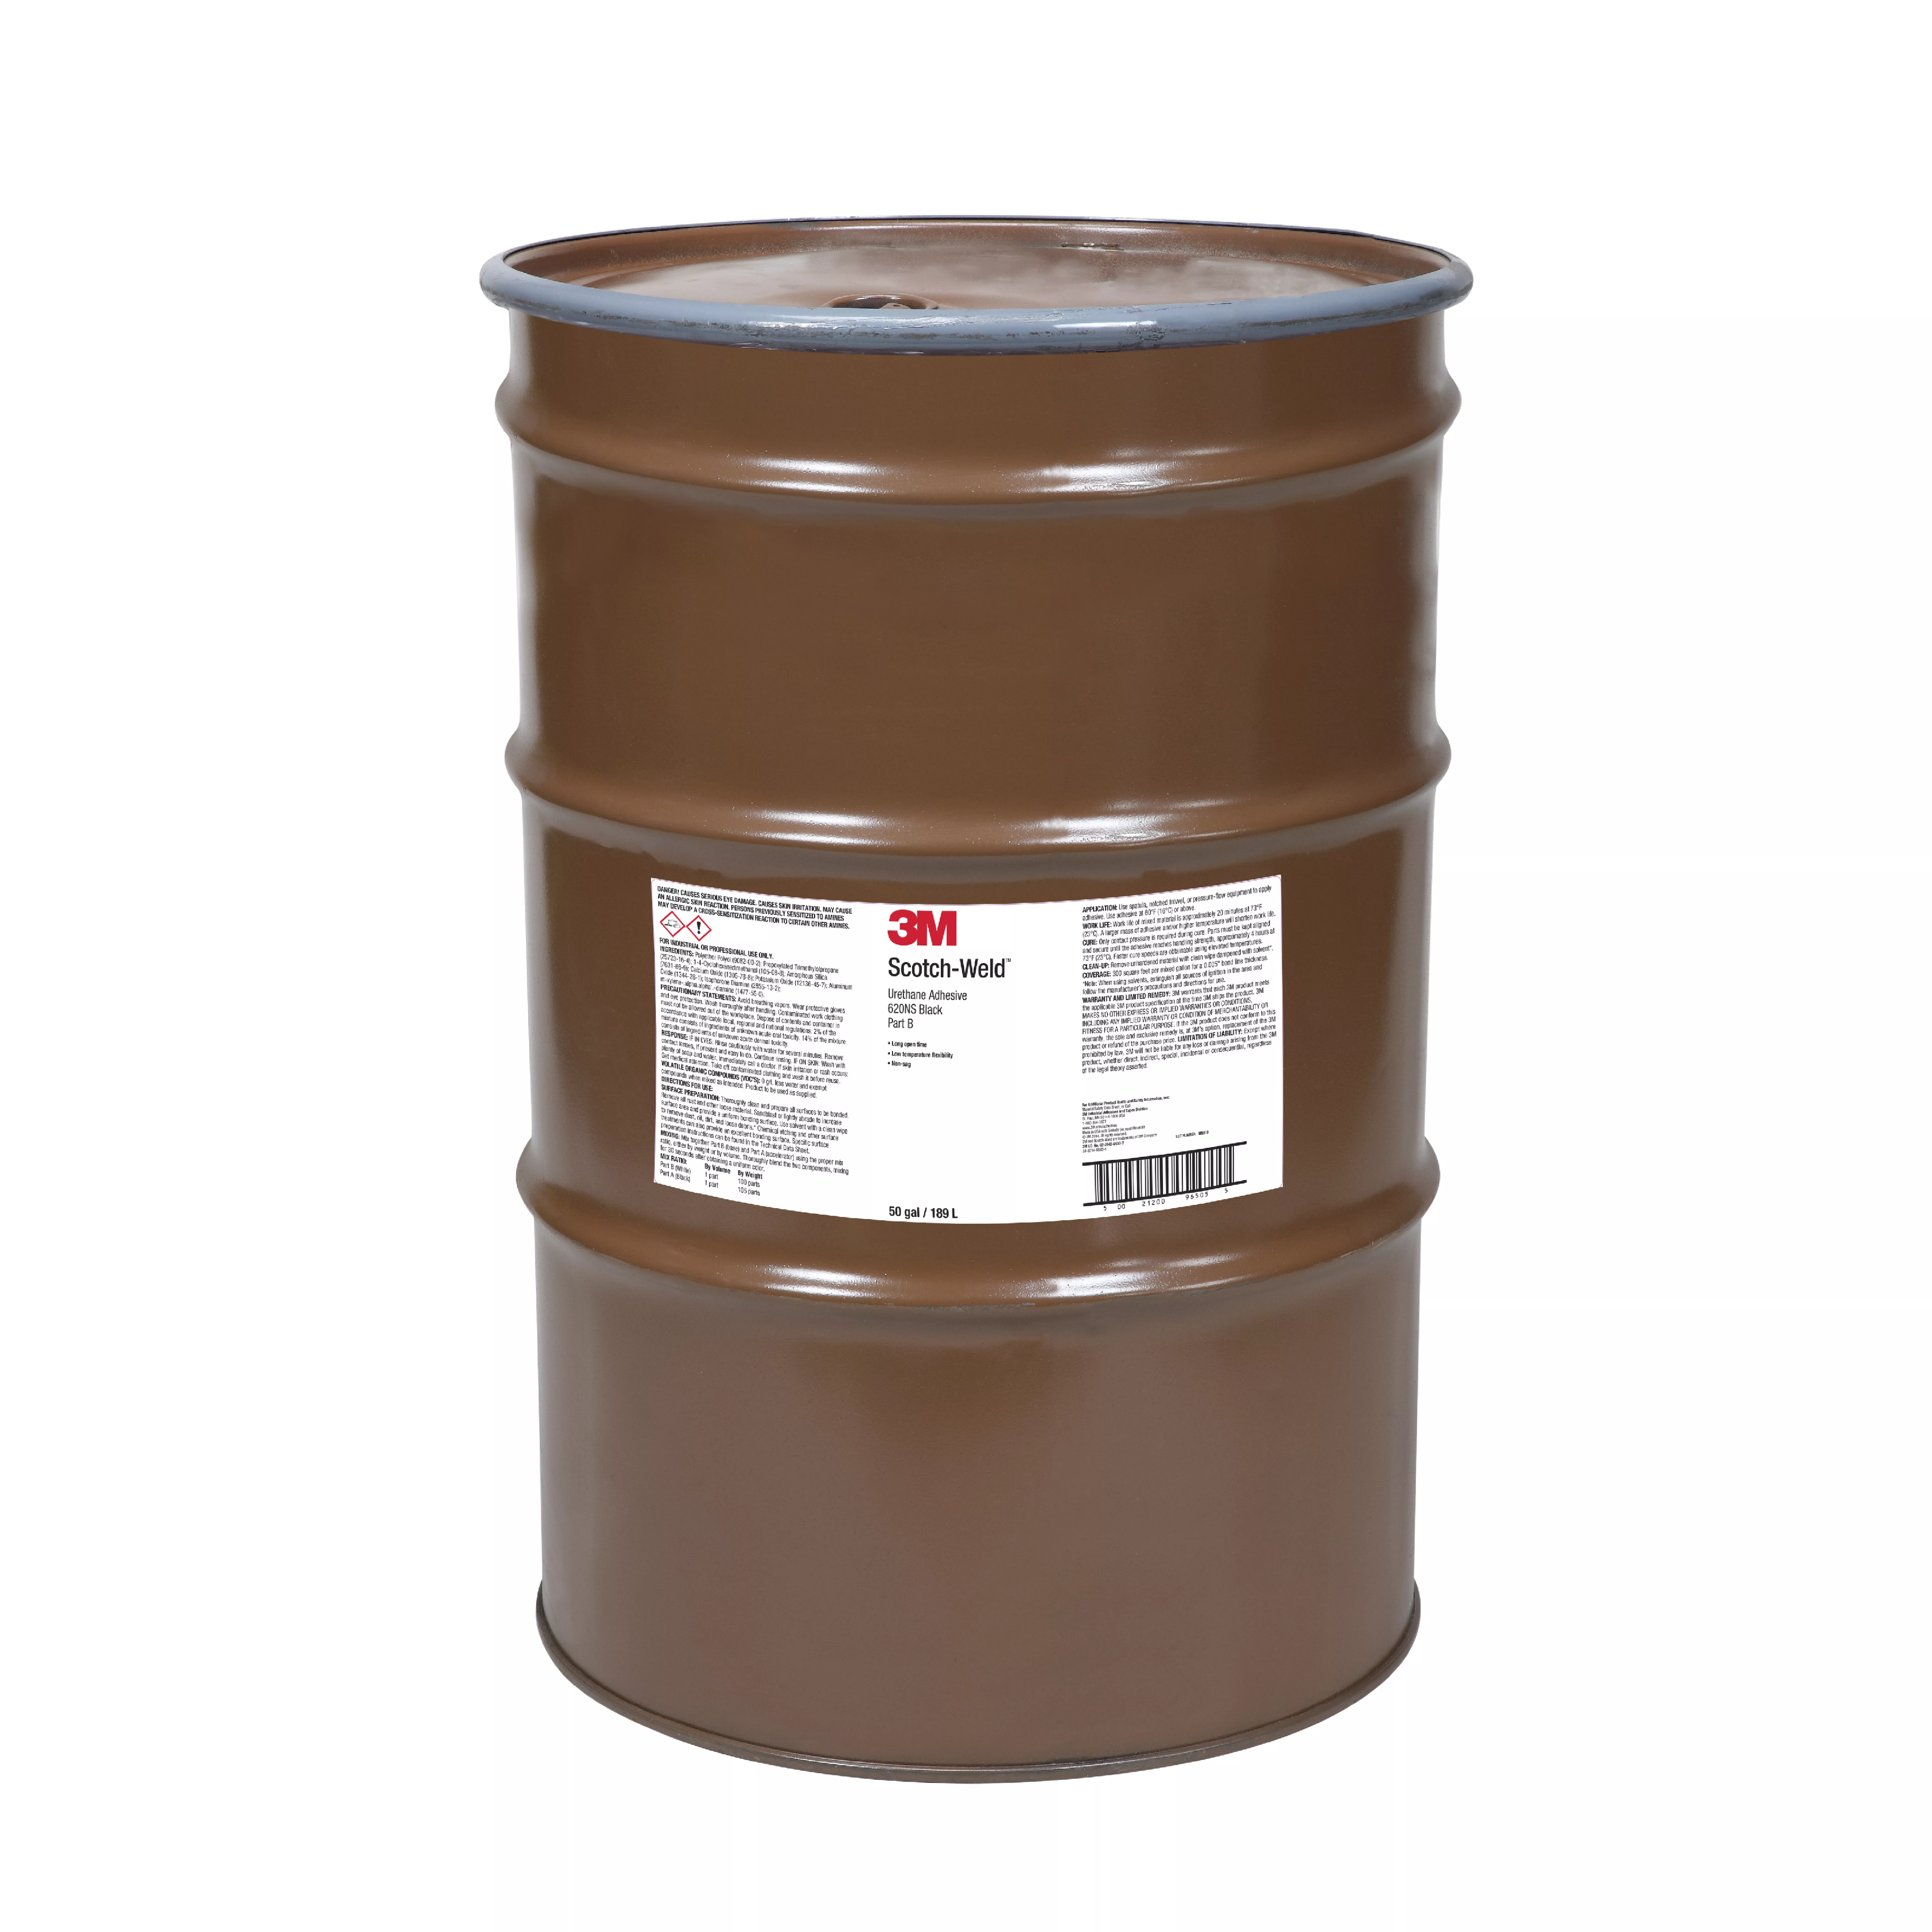 3M™ Scotch-Weld™ Urethane Adhesive 620NS, Black, Part B, 55 Gallon (50
Gallon Net), Drum